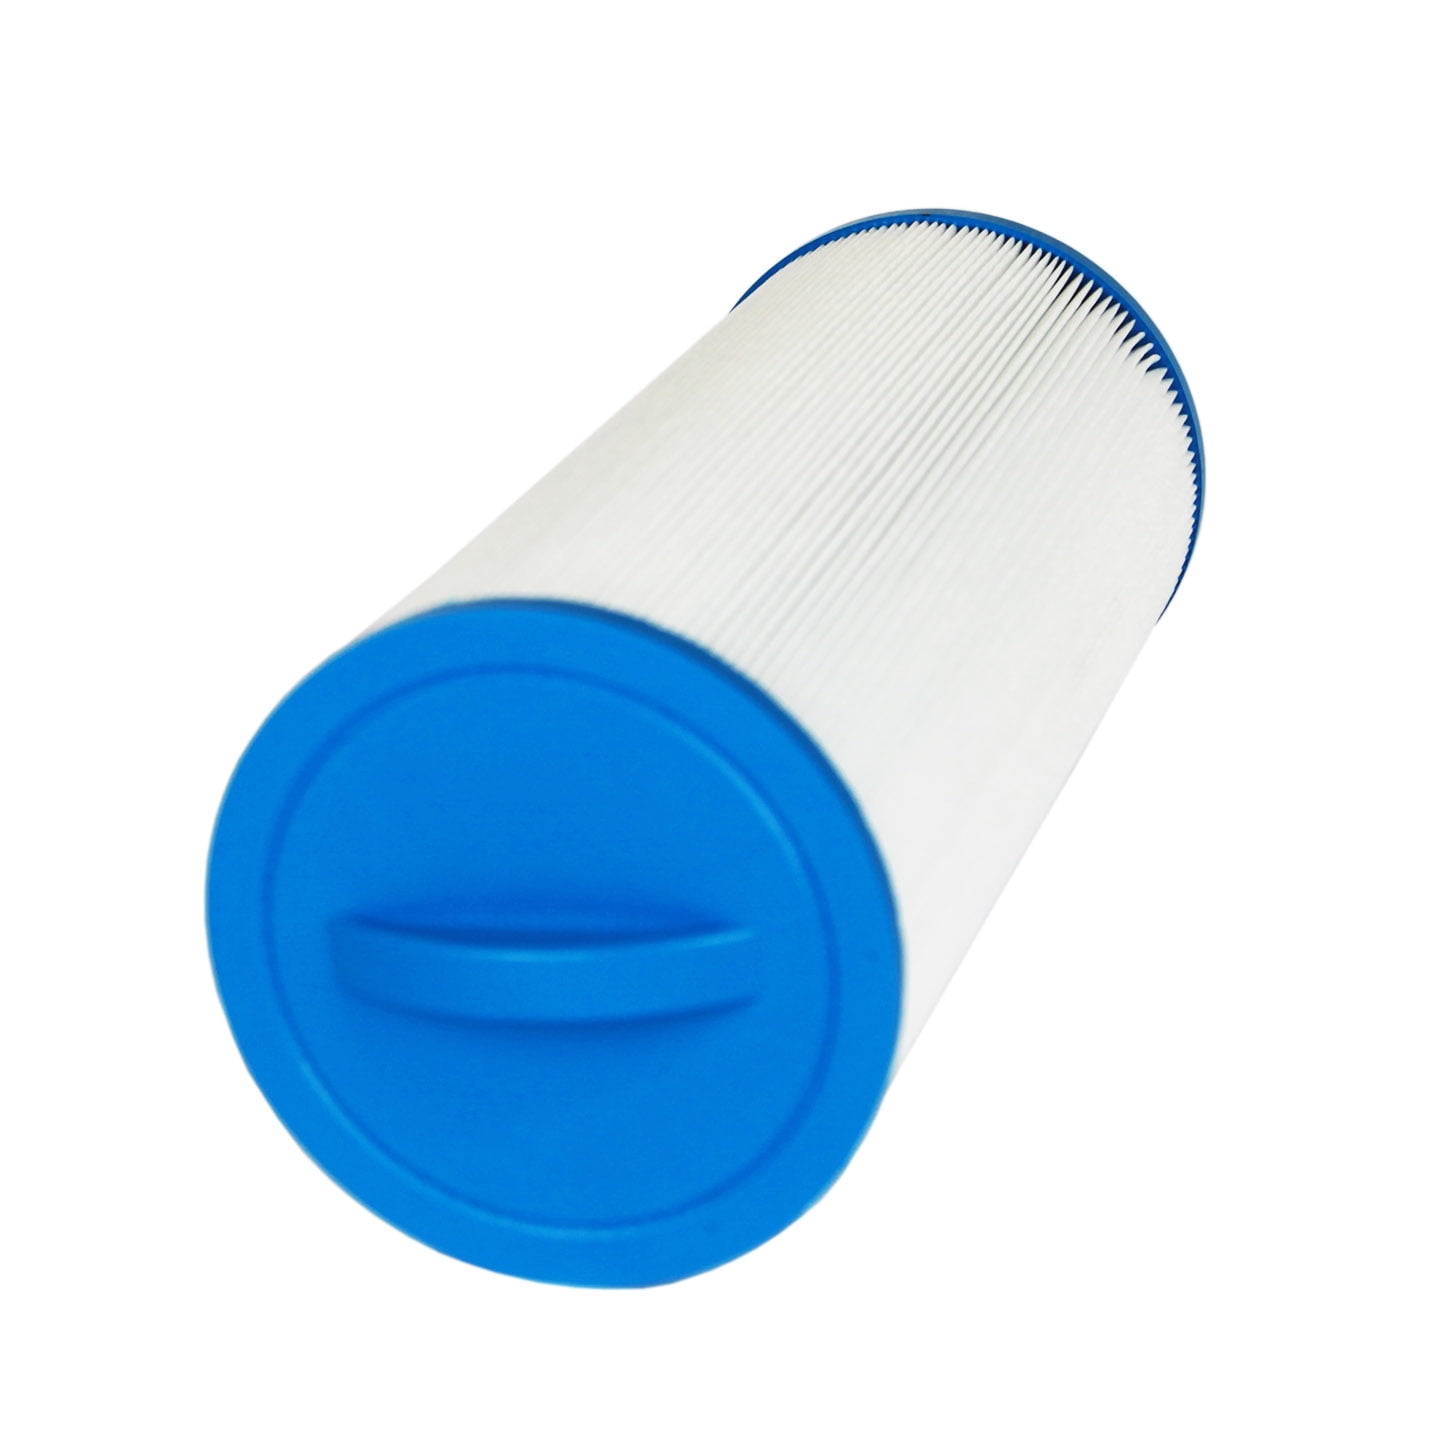 Antimicrobial Hot Tub Filter Marquisn Cal Spas Premium ultra filter FC-0195